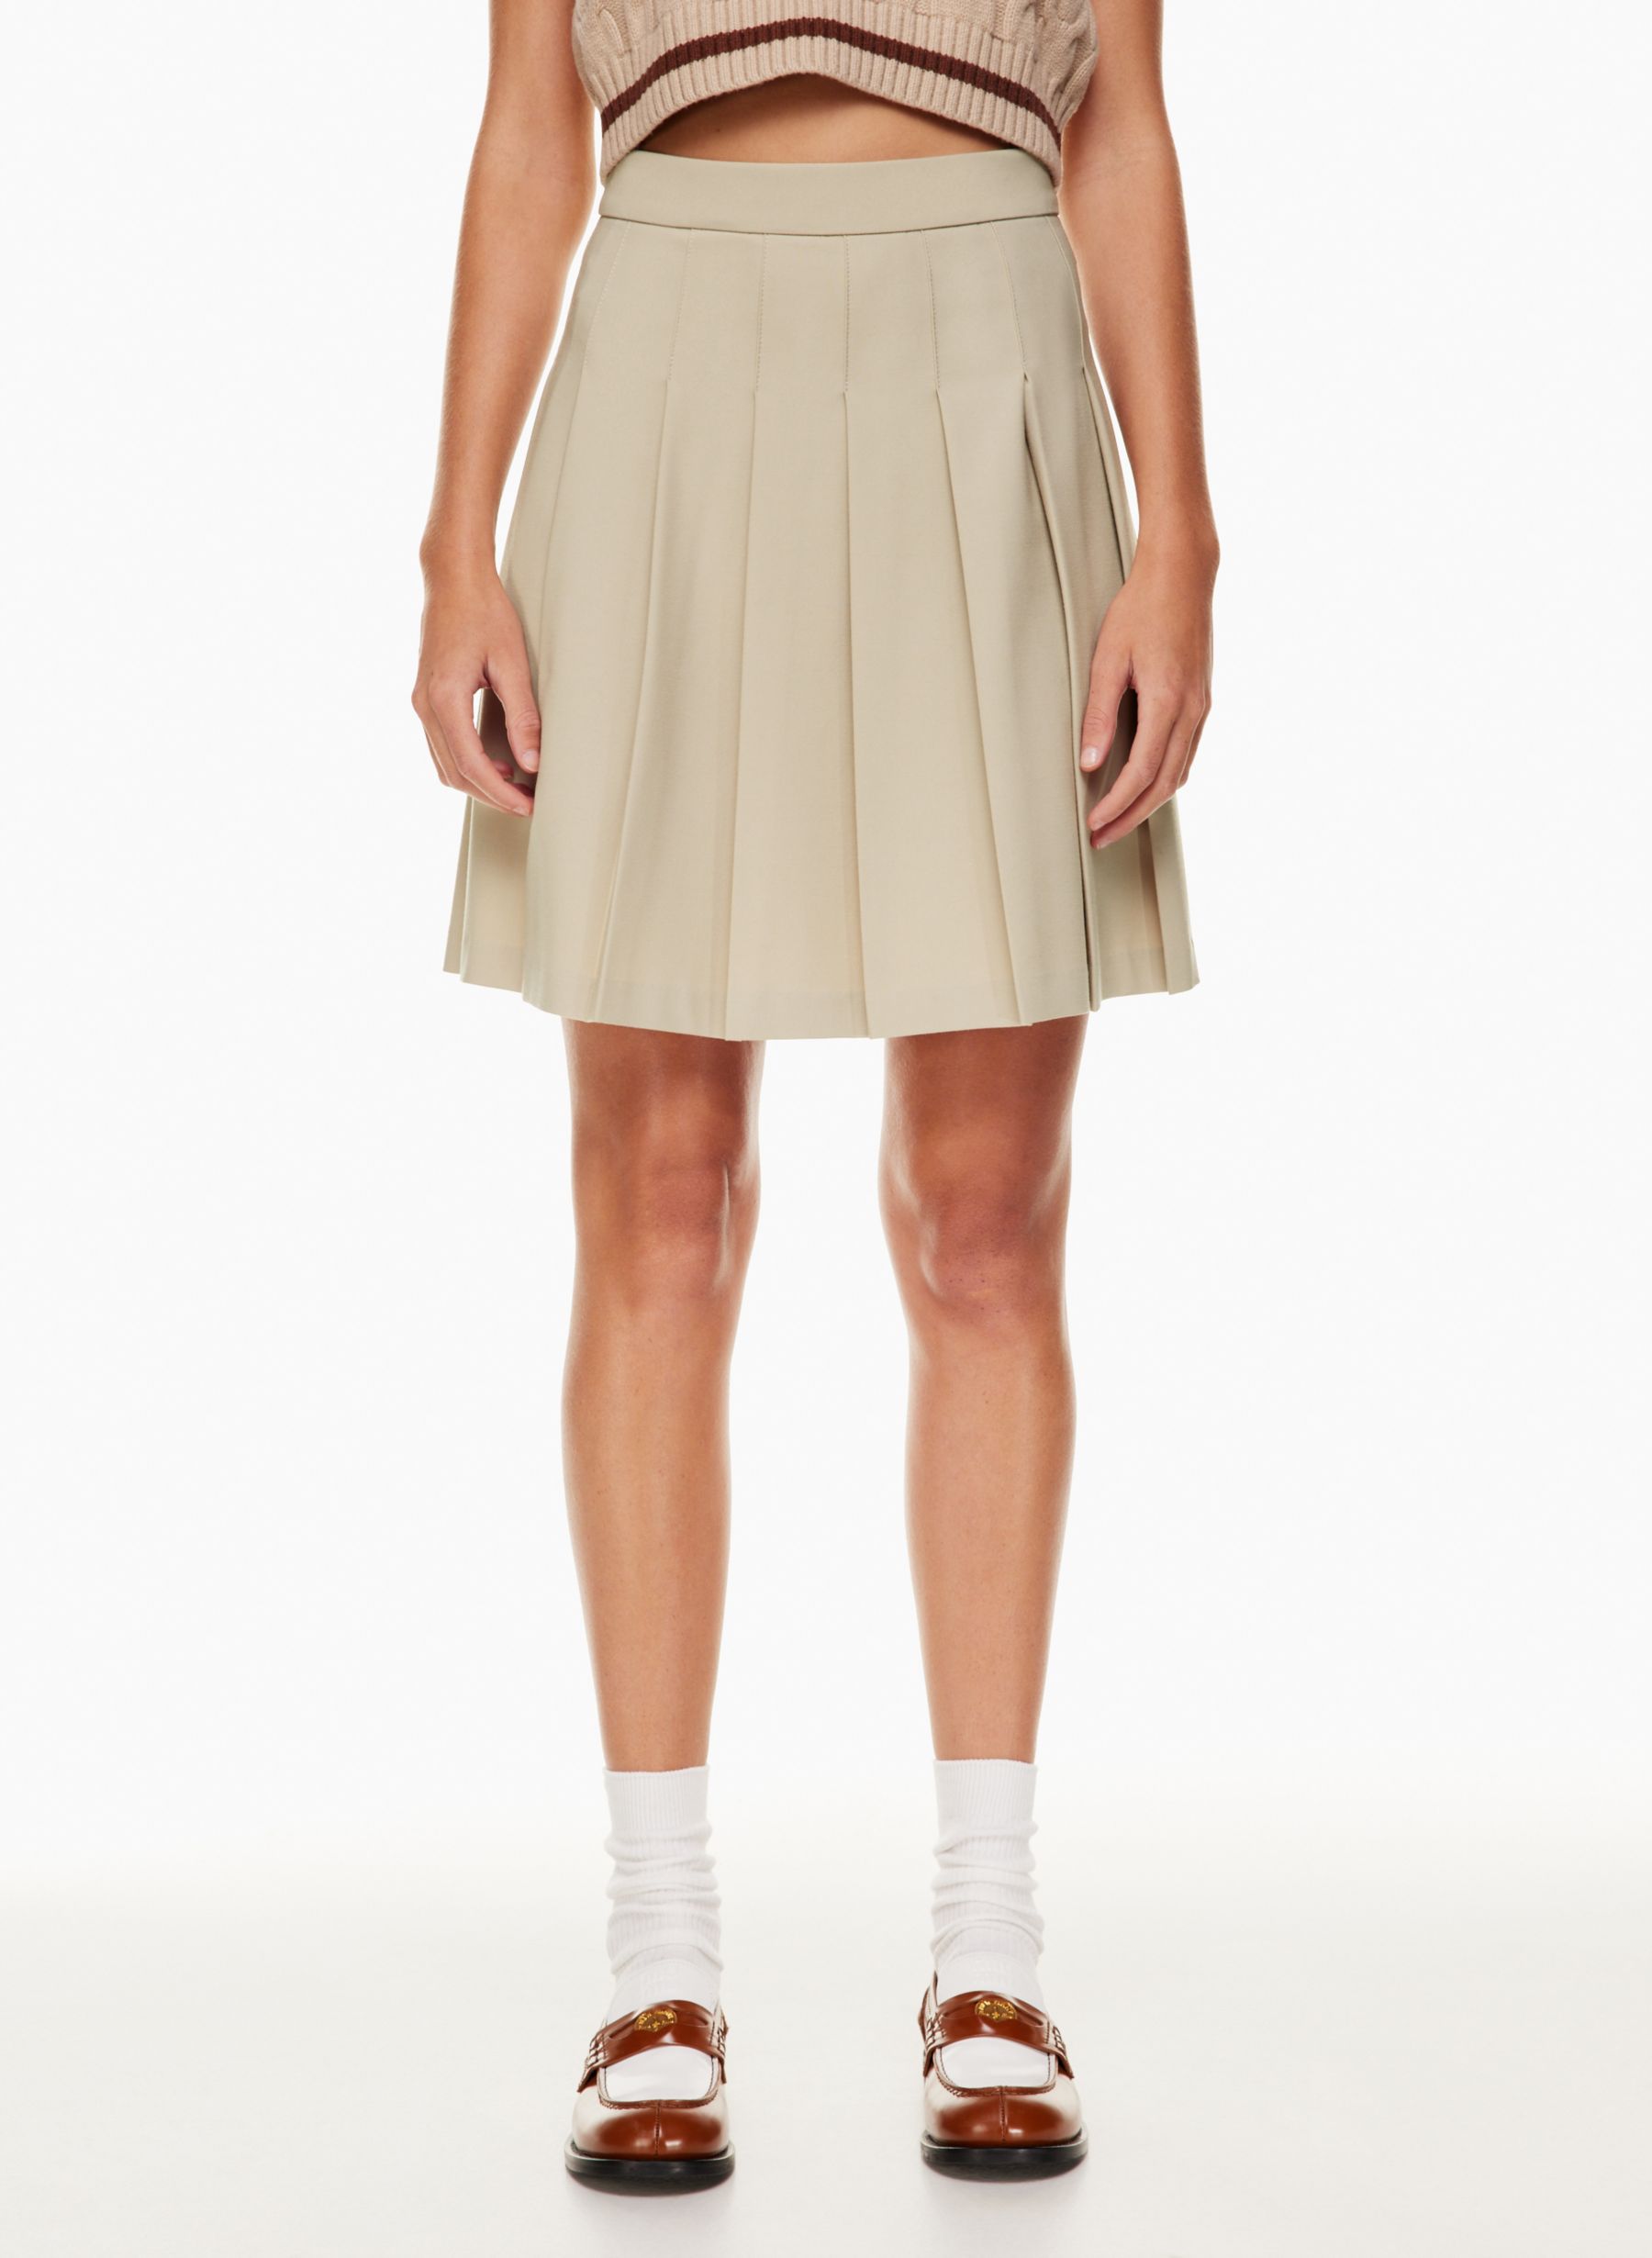 Olive knee skirt